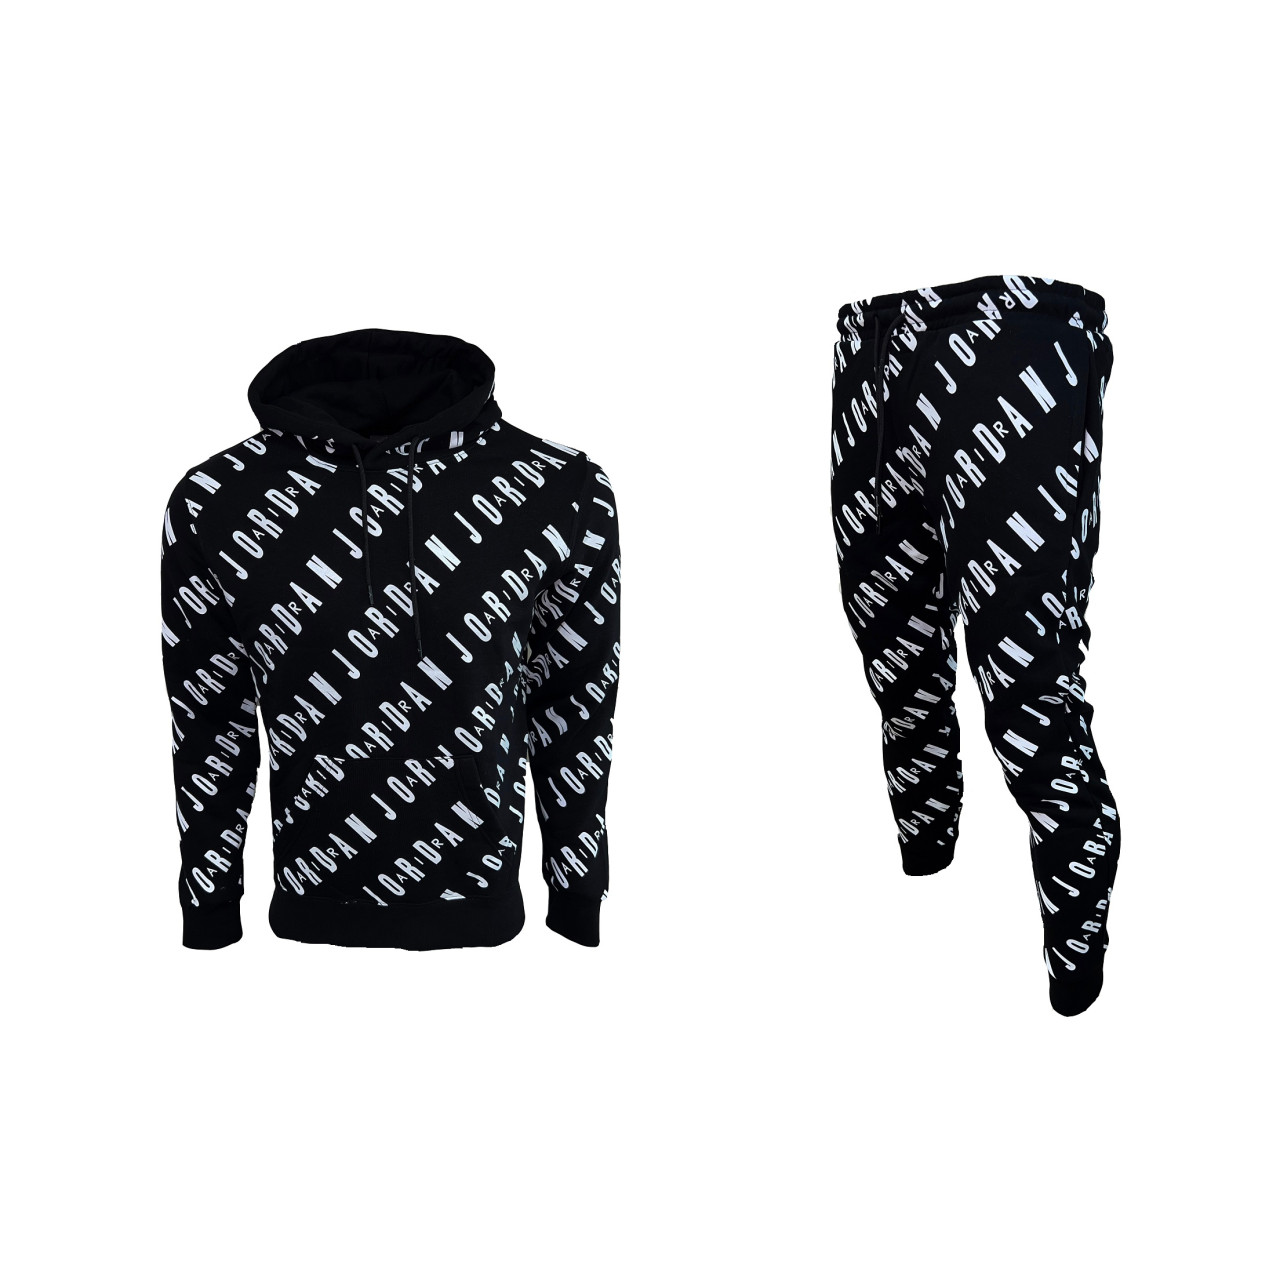 Nike JORDAN Multiple Logo Sweatshirt + Pants Black